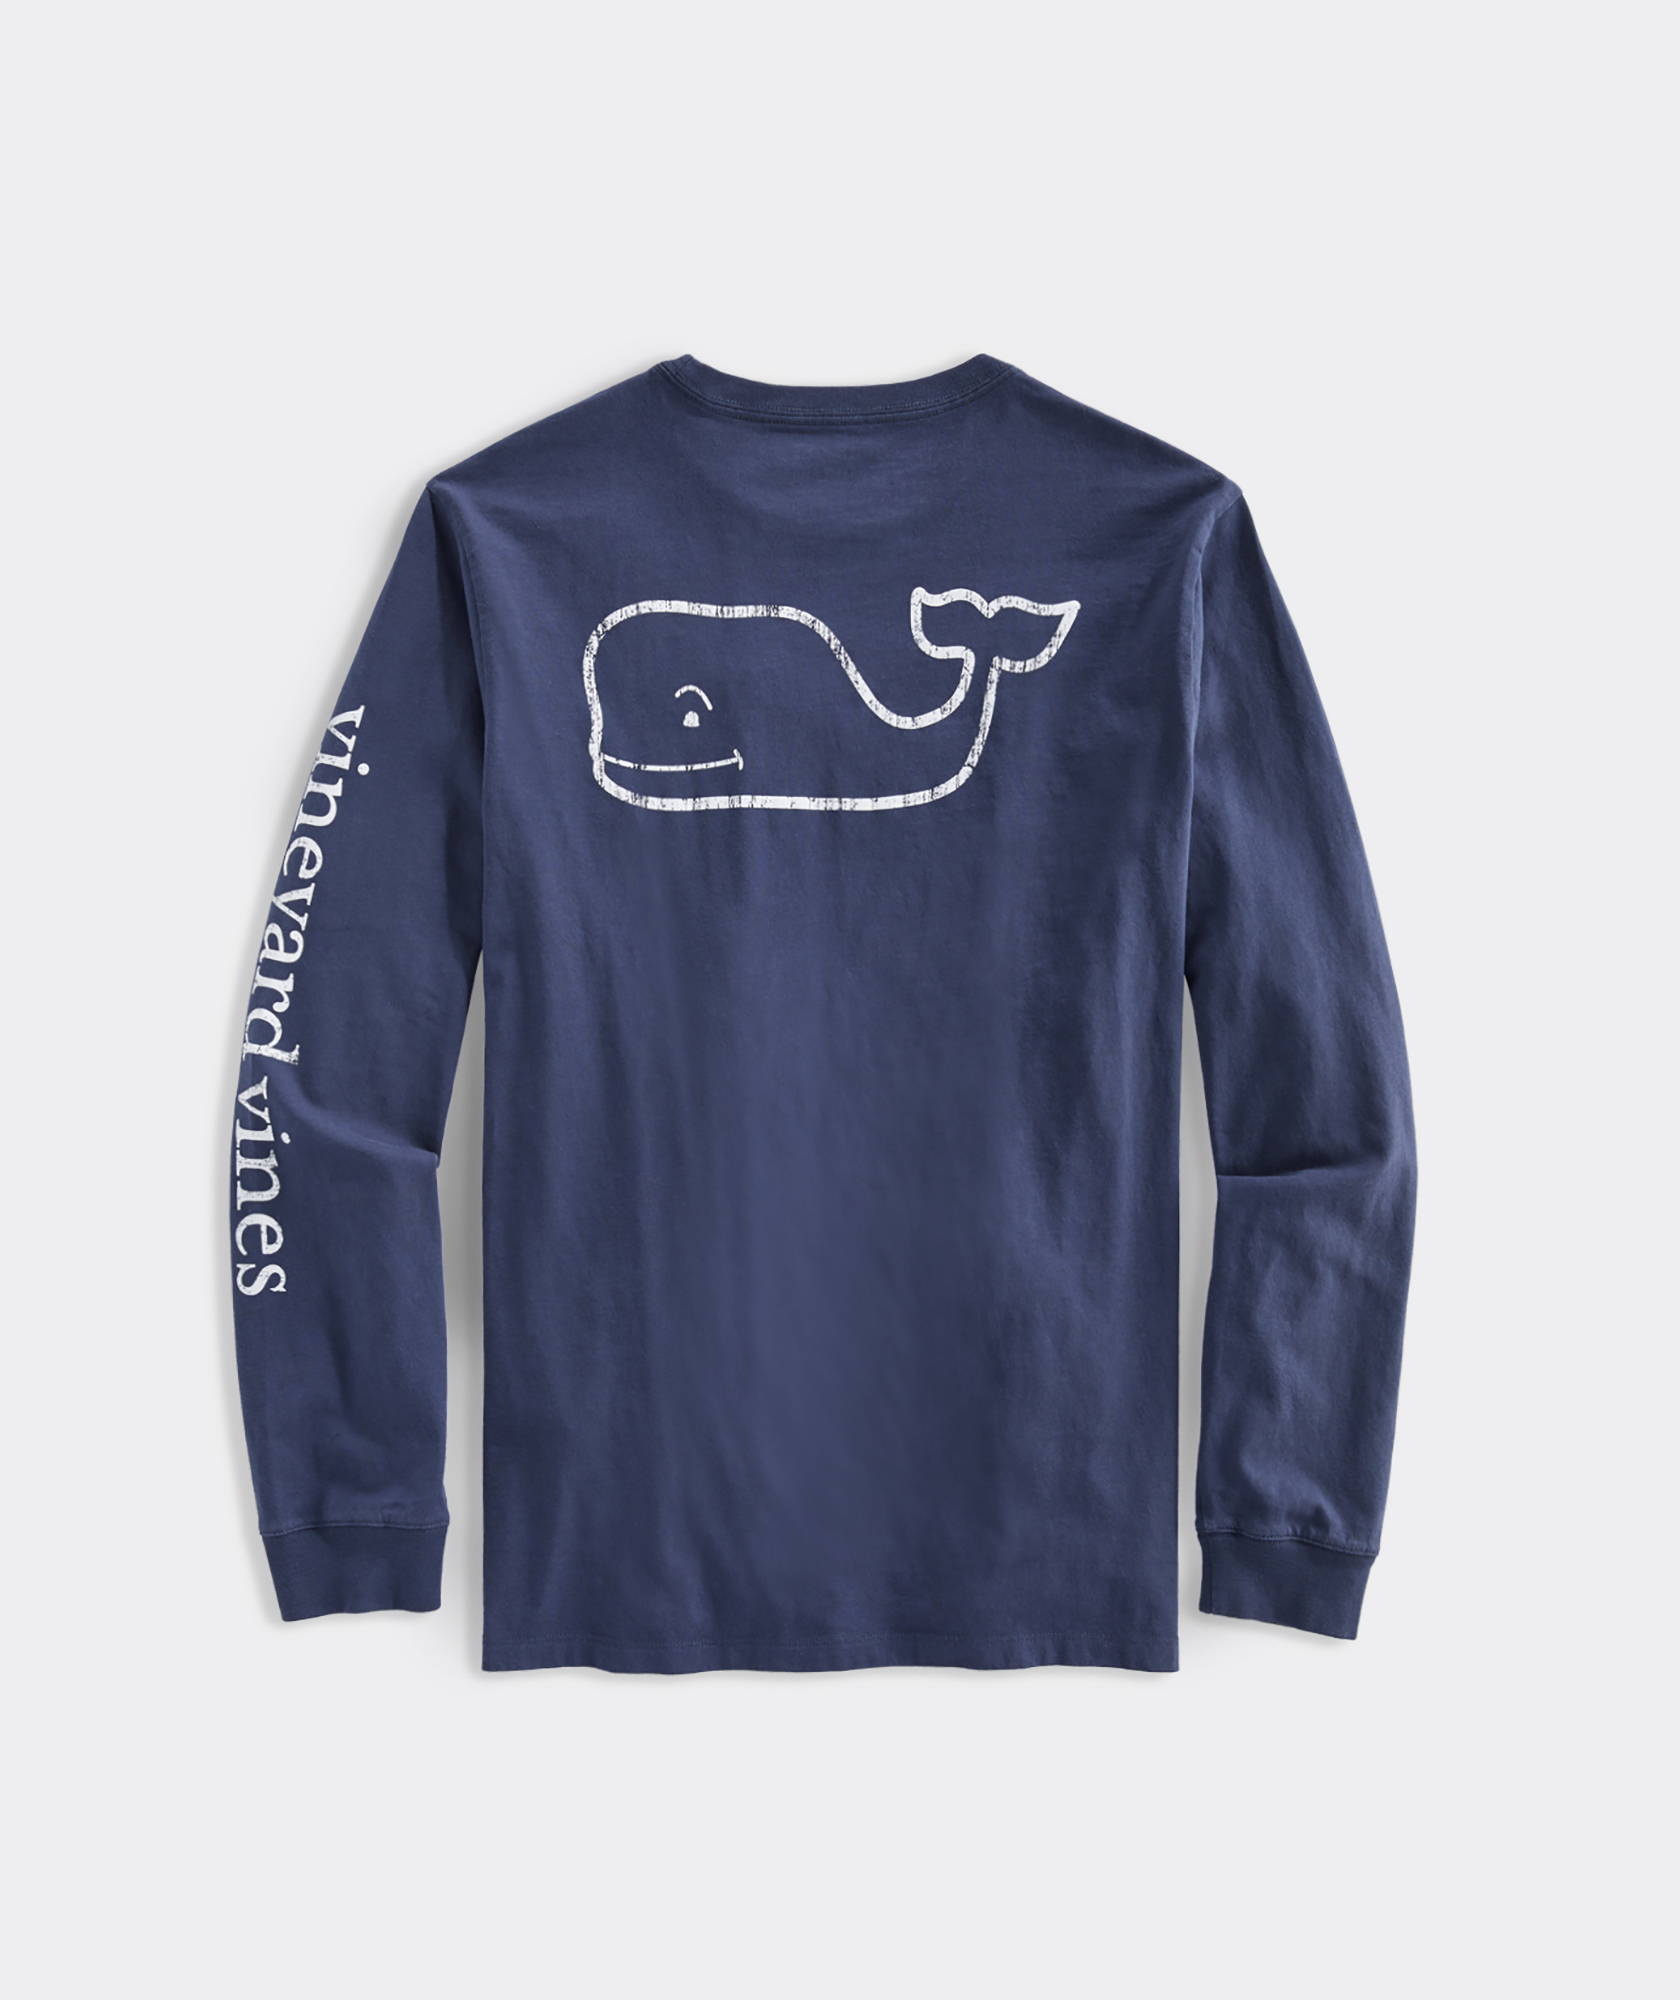 Vineyard Vines Men's Long Sleeve Vintage Whale Pocket T-Shirt